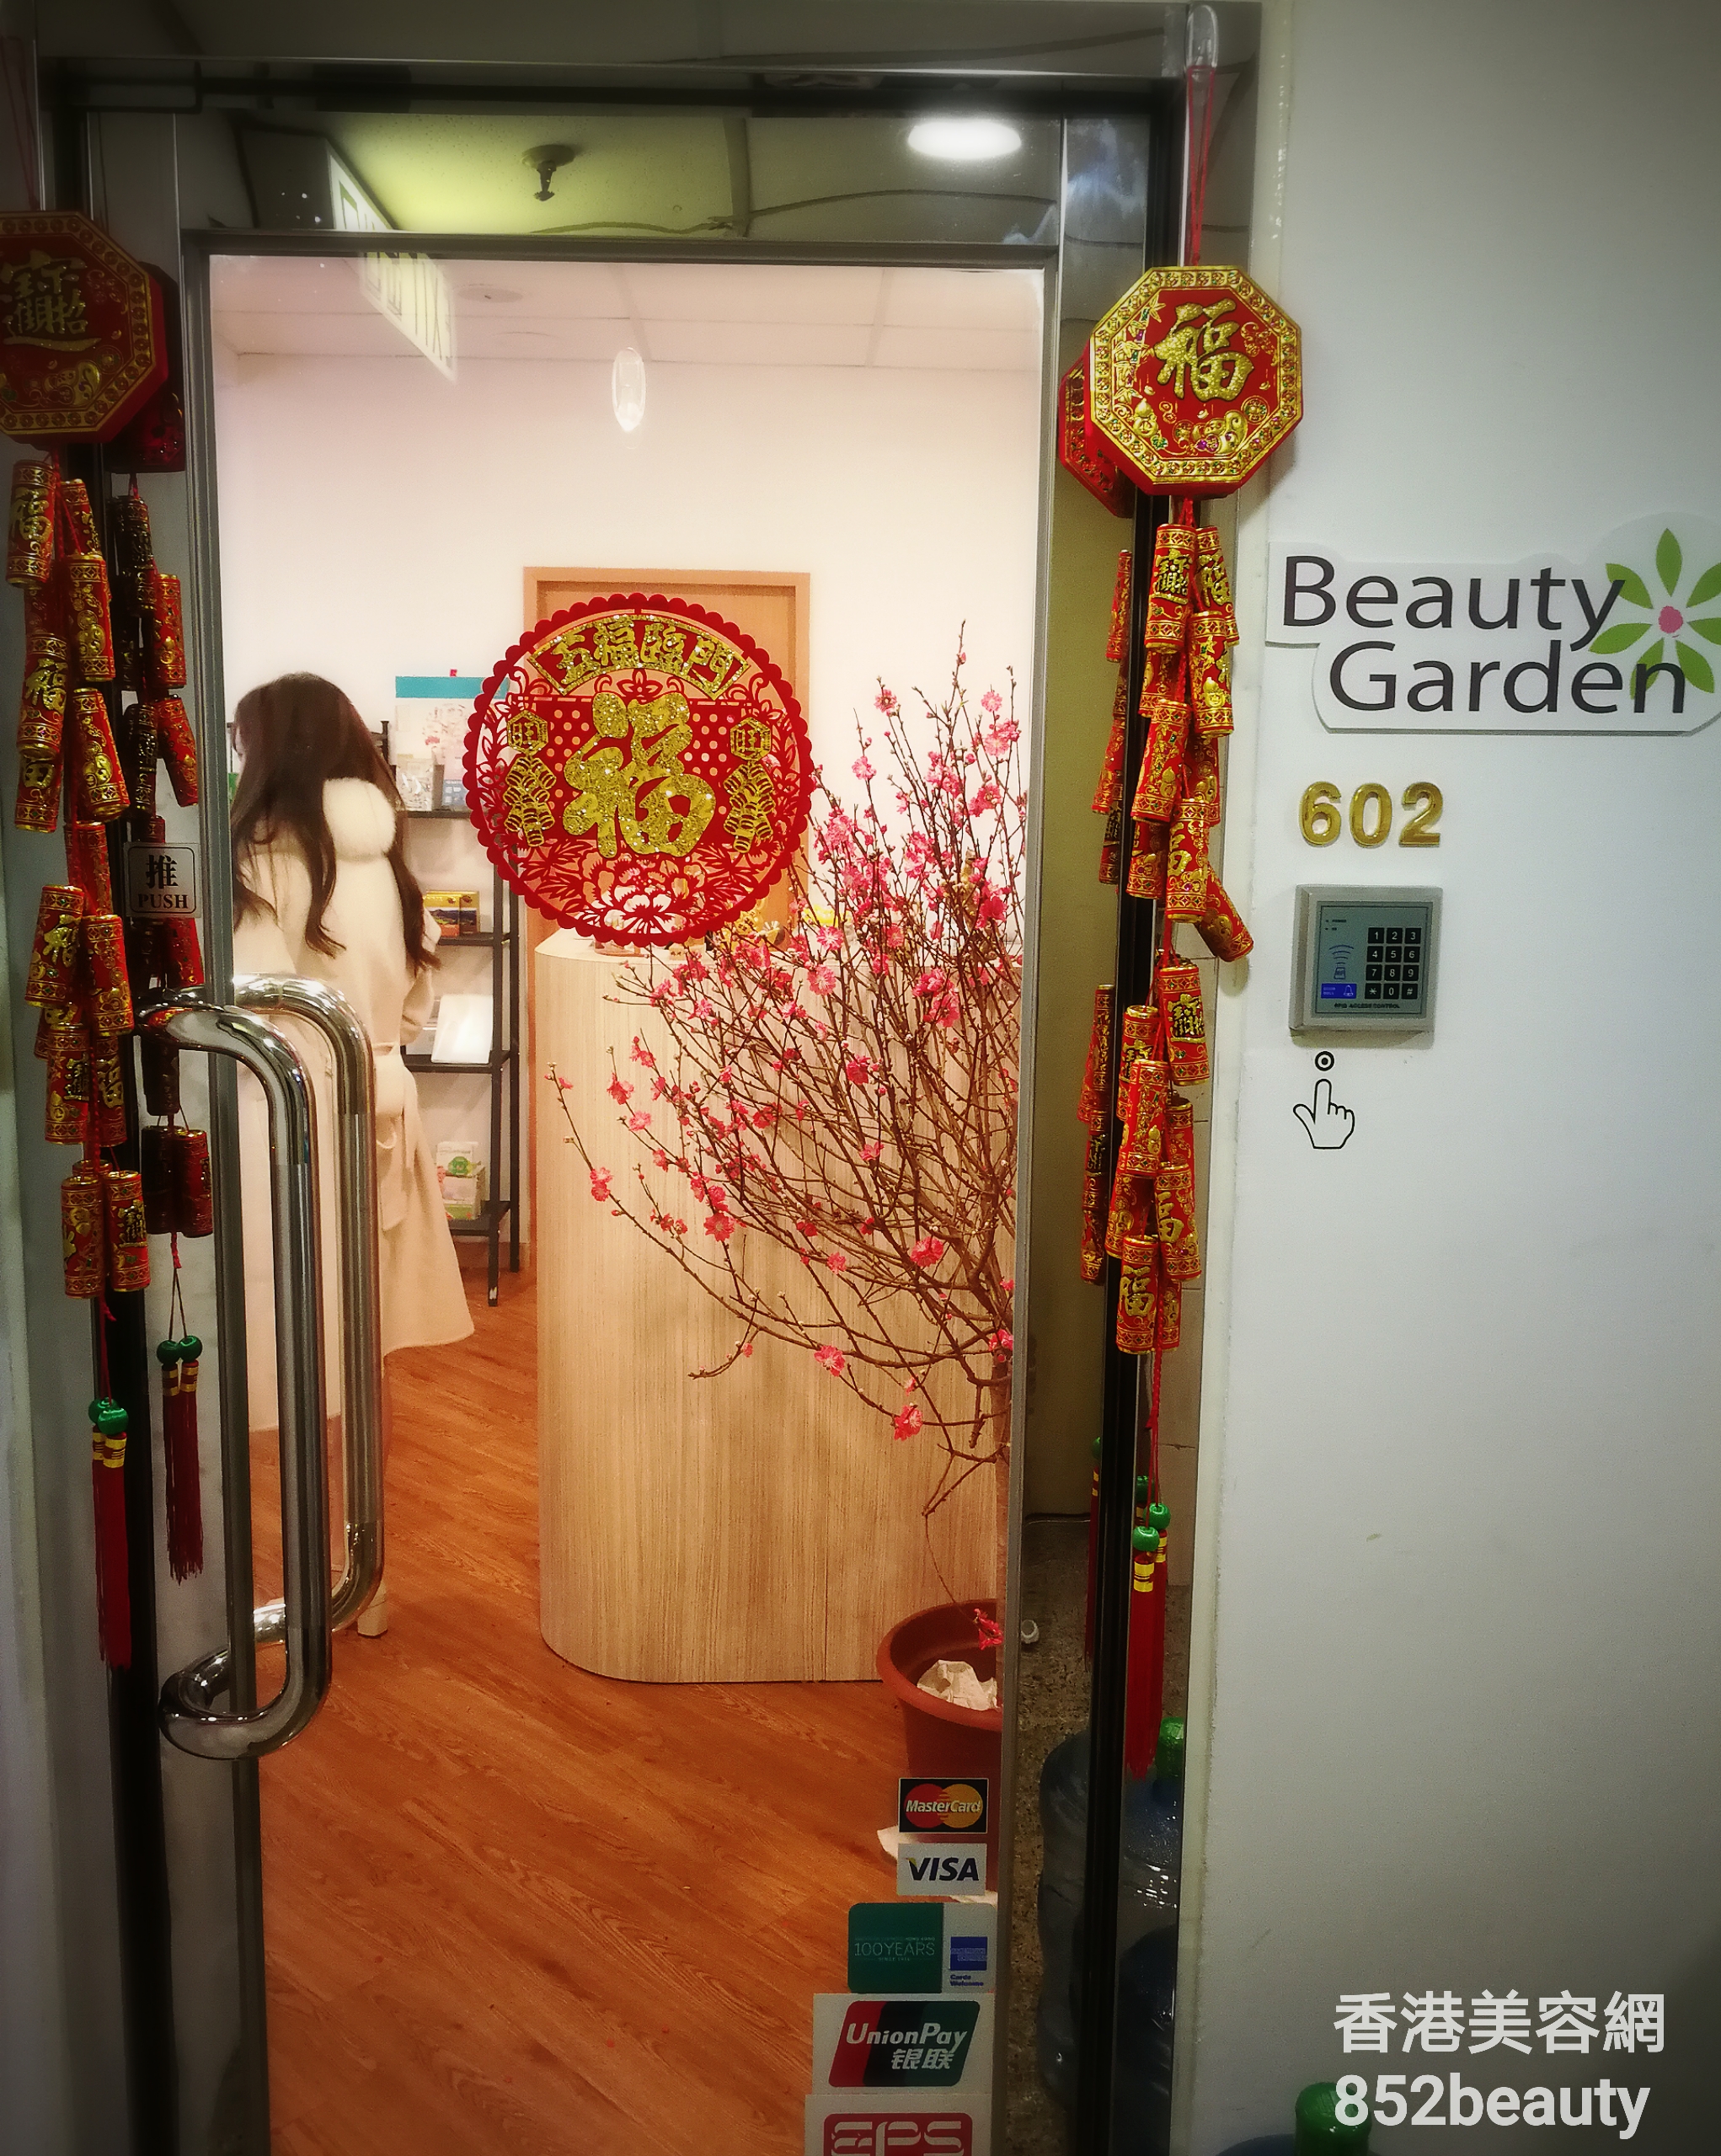 HK Beauty Salon Hong Kong Beauty Salon Beauty Salon / Beautician: Beauty Garden